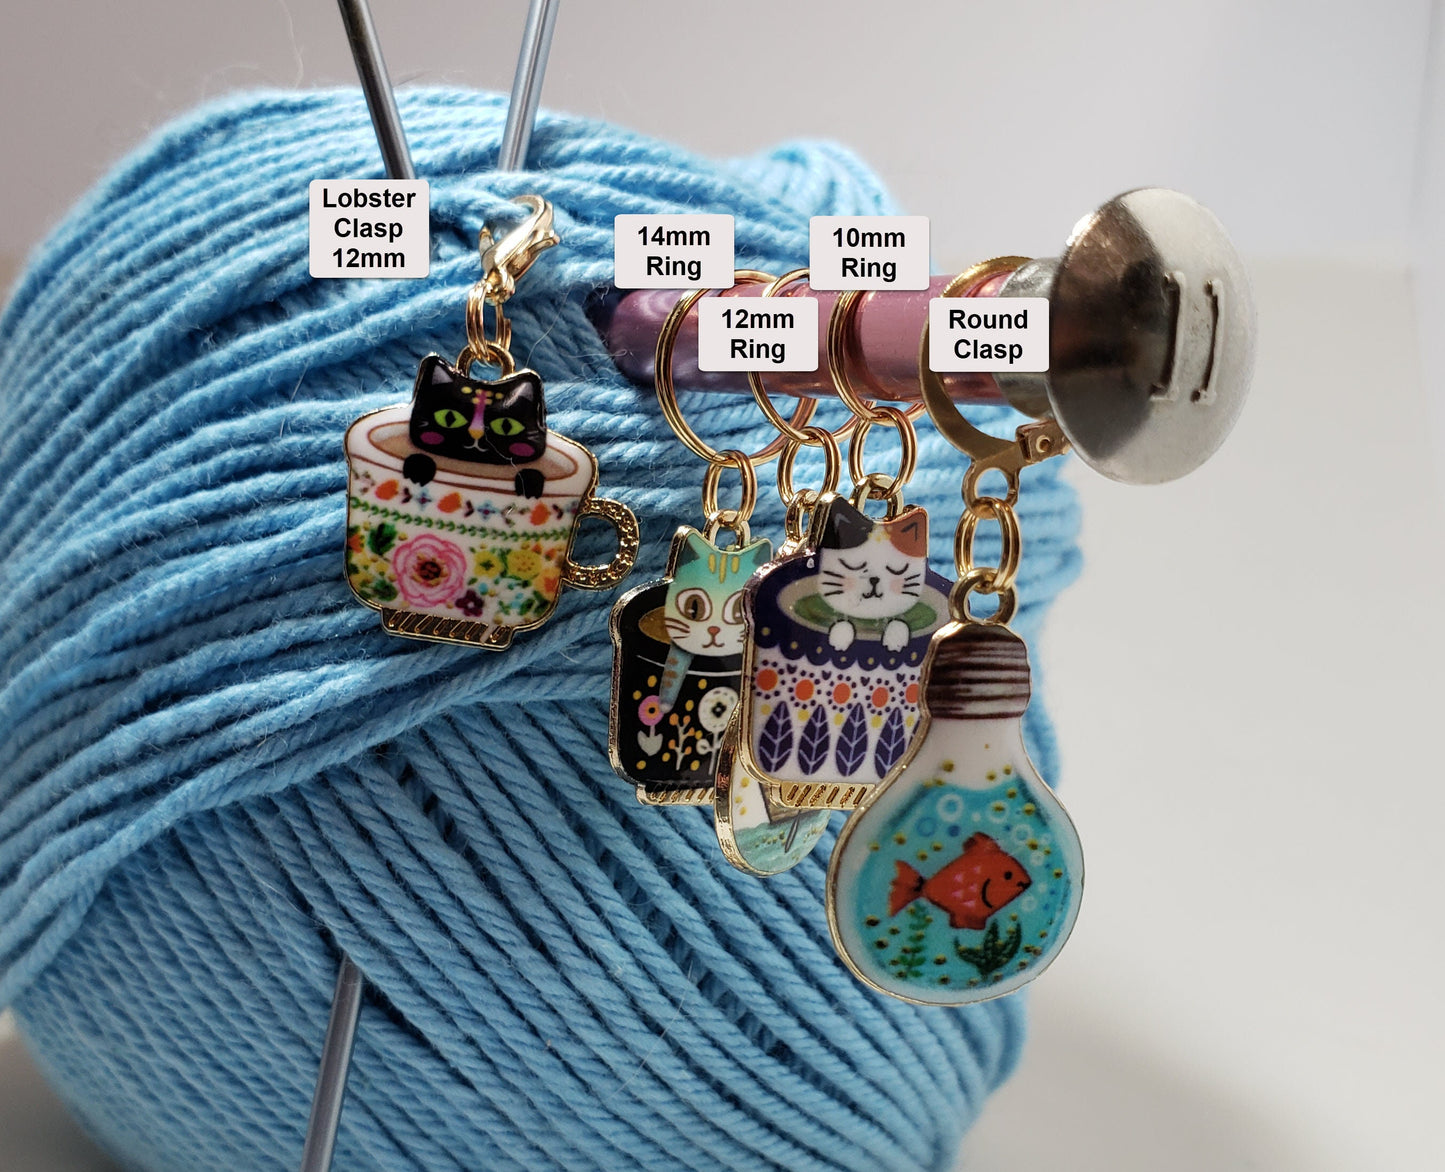 Stitch Markers for Knitting, 3 pc Dancing Zebra | Crochet stitch marker, progress keeper, project bag charms, crochet accessory